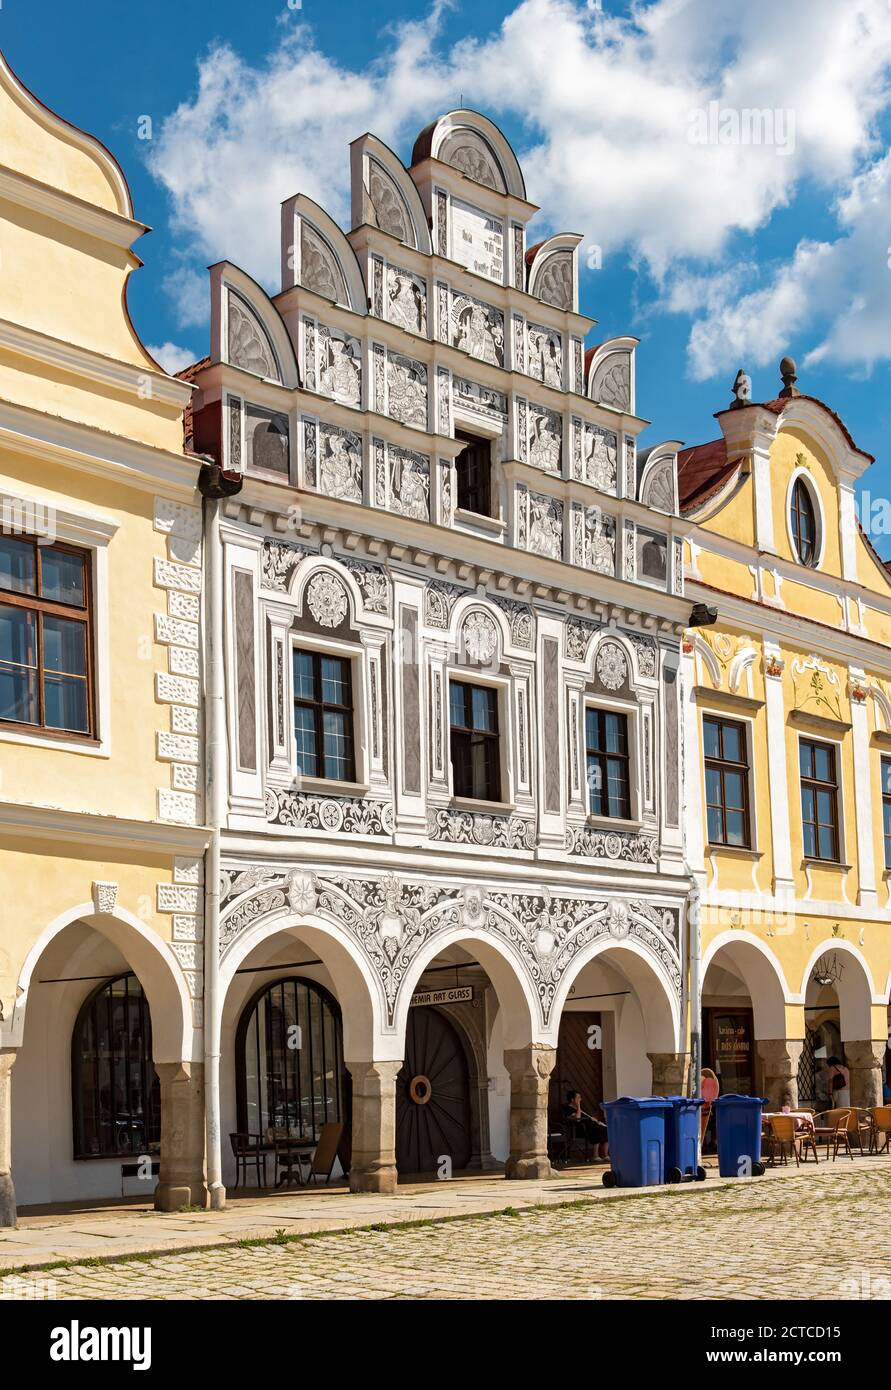 House Nr. 61 with sgraffiti facade, Telč Town Square, Czech Republic Stock Photo